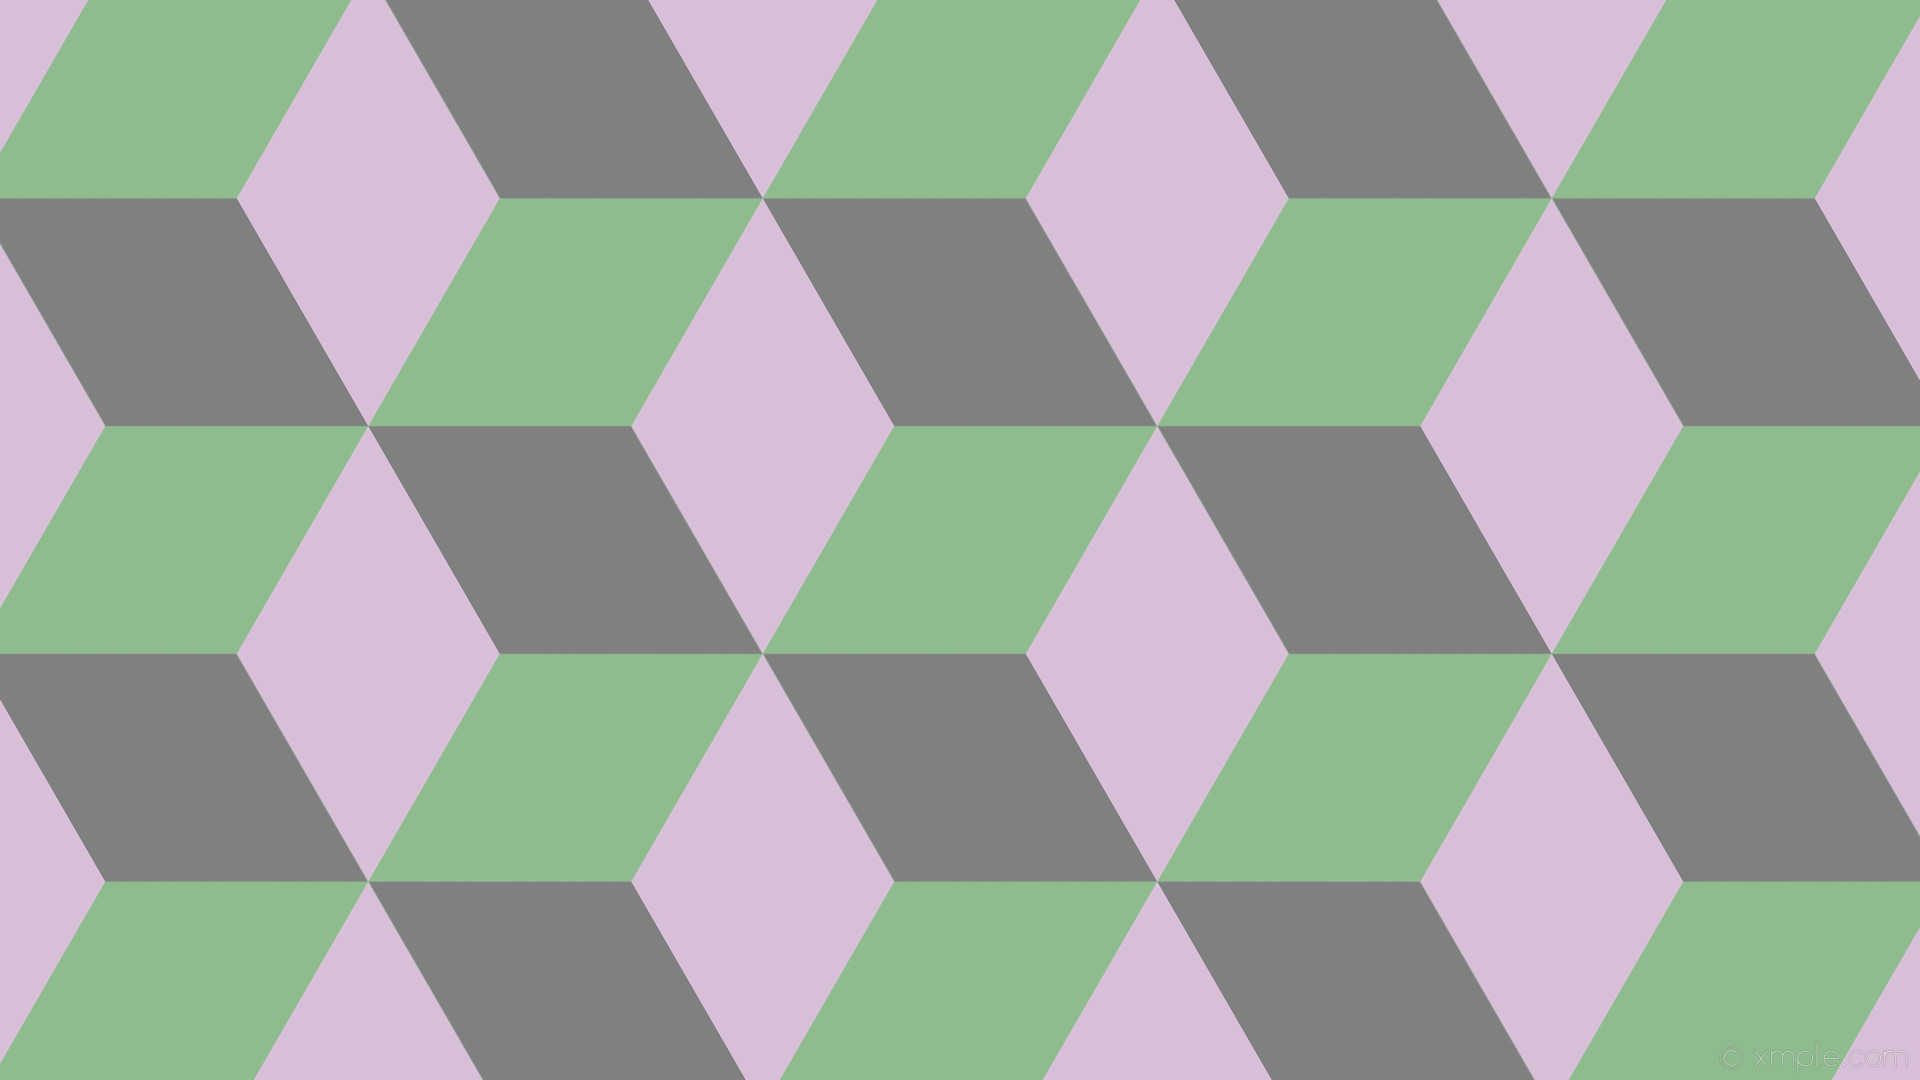 1920x1080 wallpaper 3d cubes grey purple green dark sea green gray thistle #8fbc8f  #808080 #